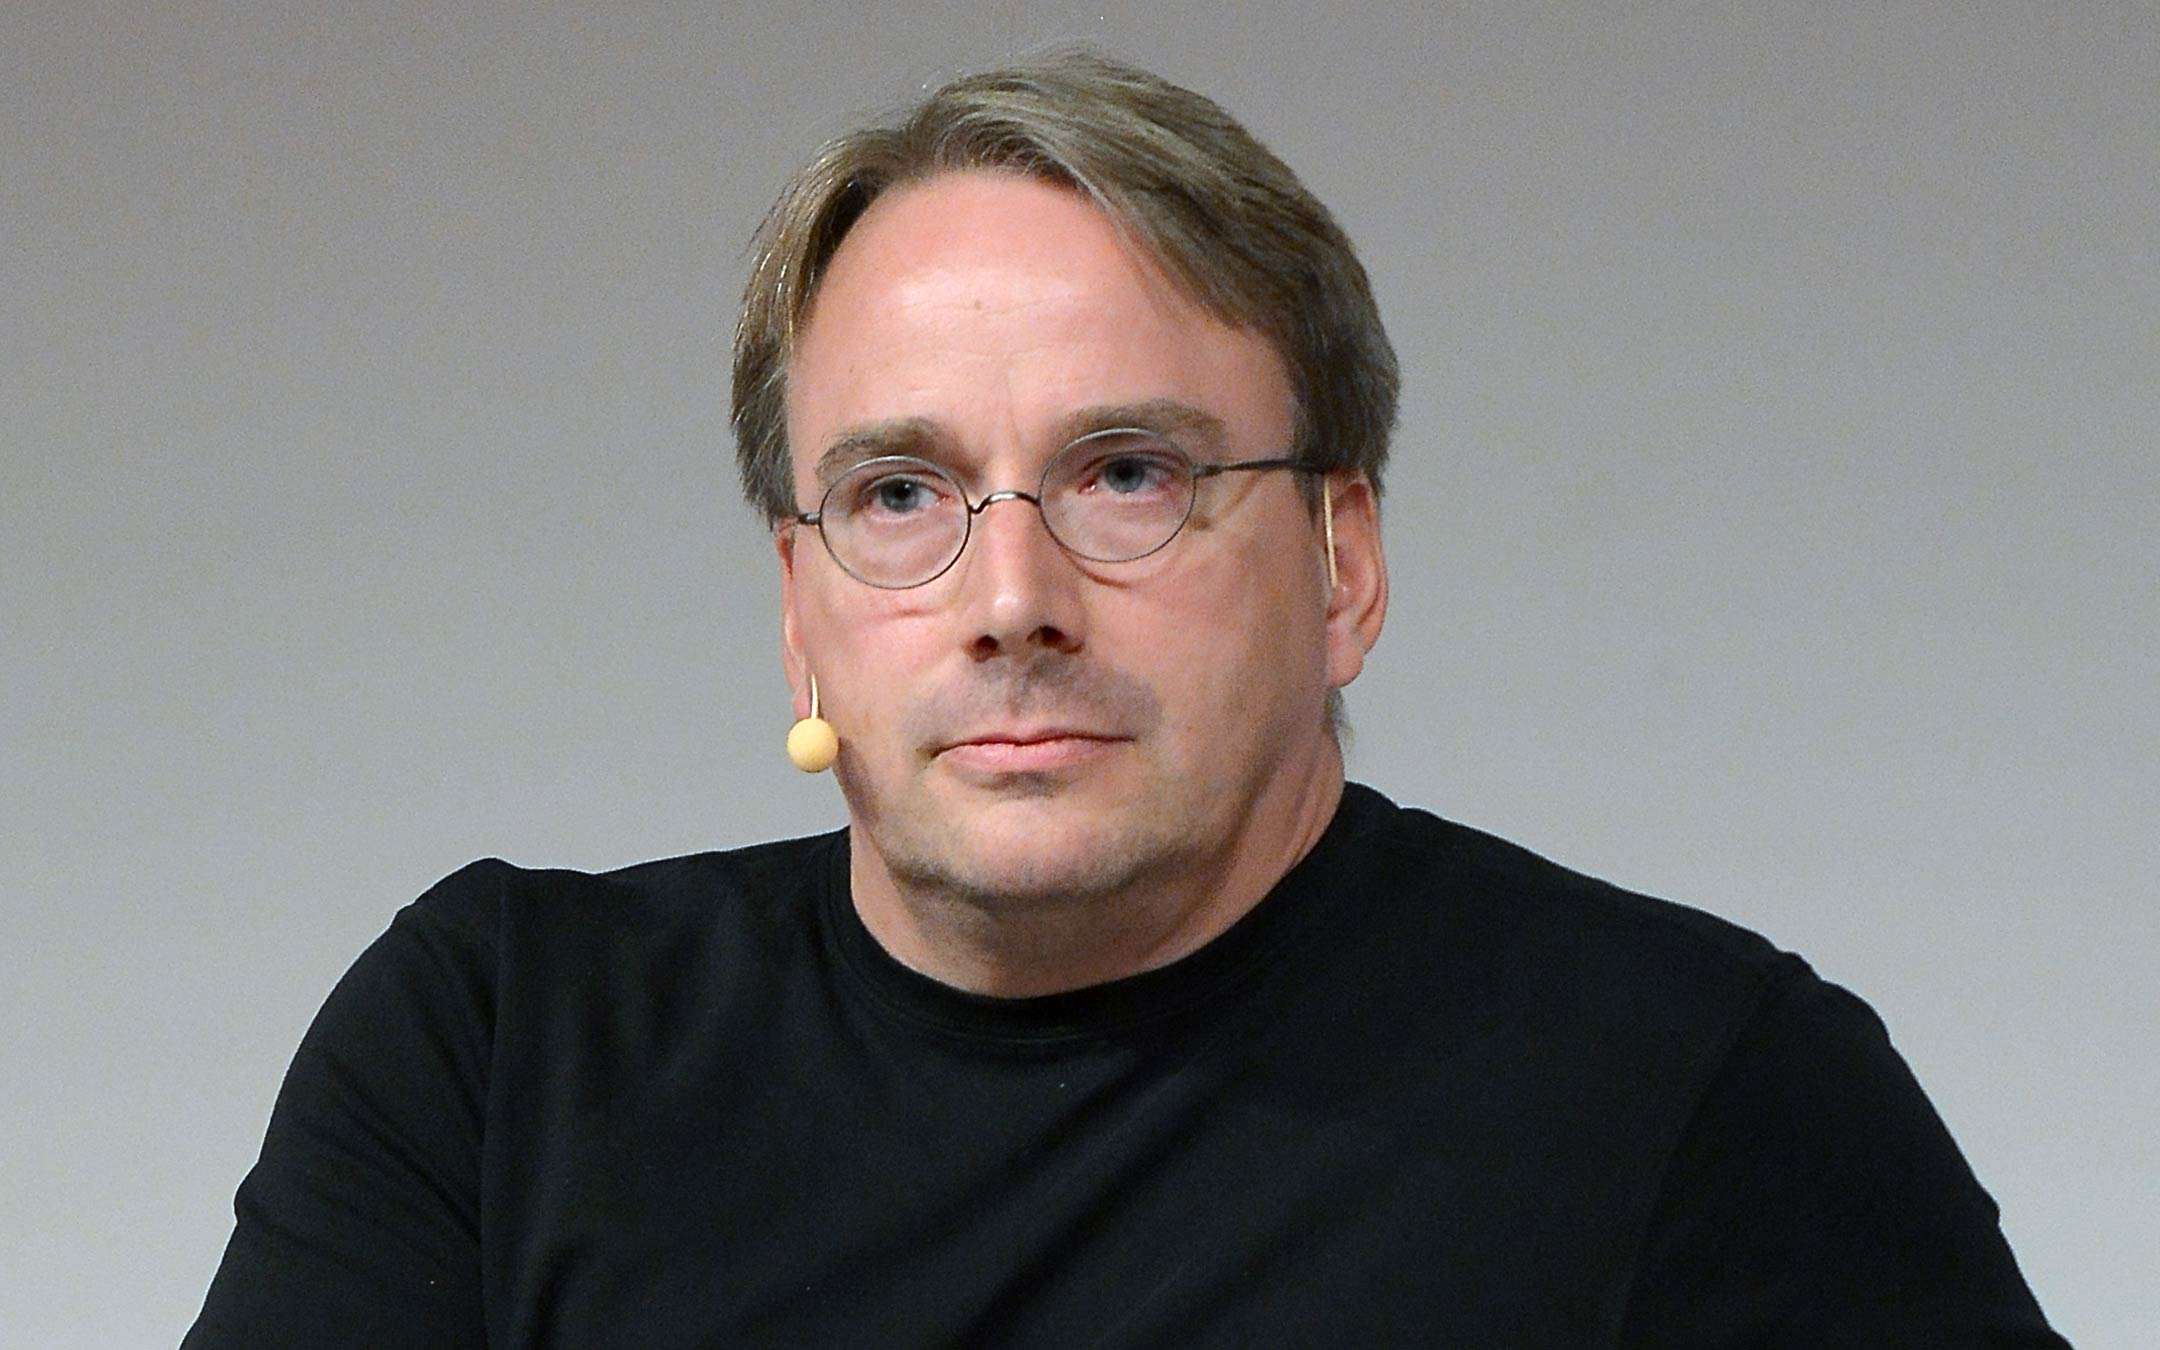 Linus Torvalds ai No Vax: vaccinatevi o state zitti